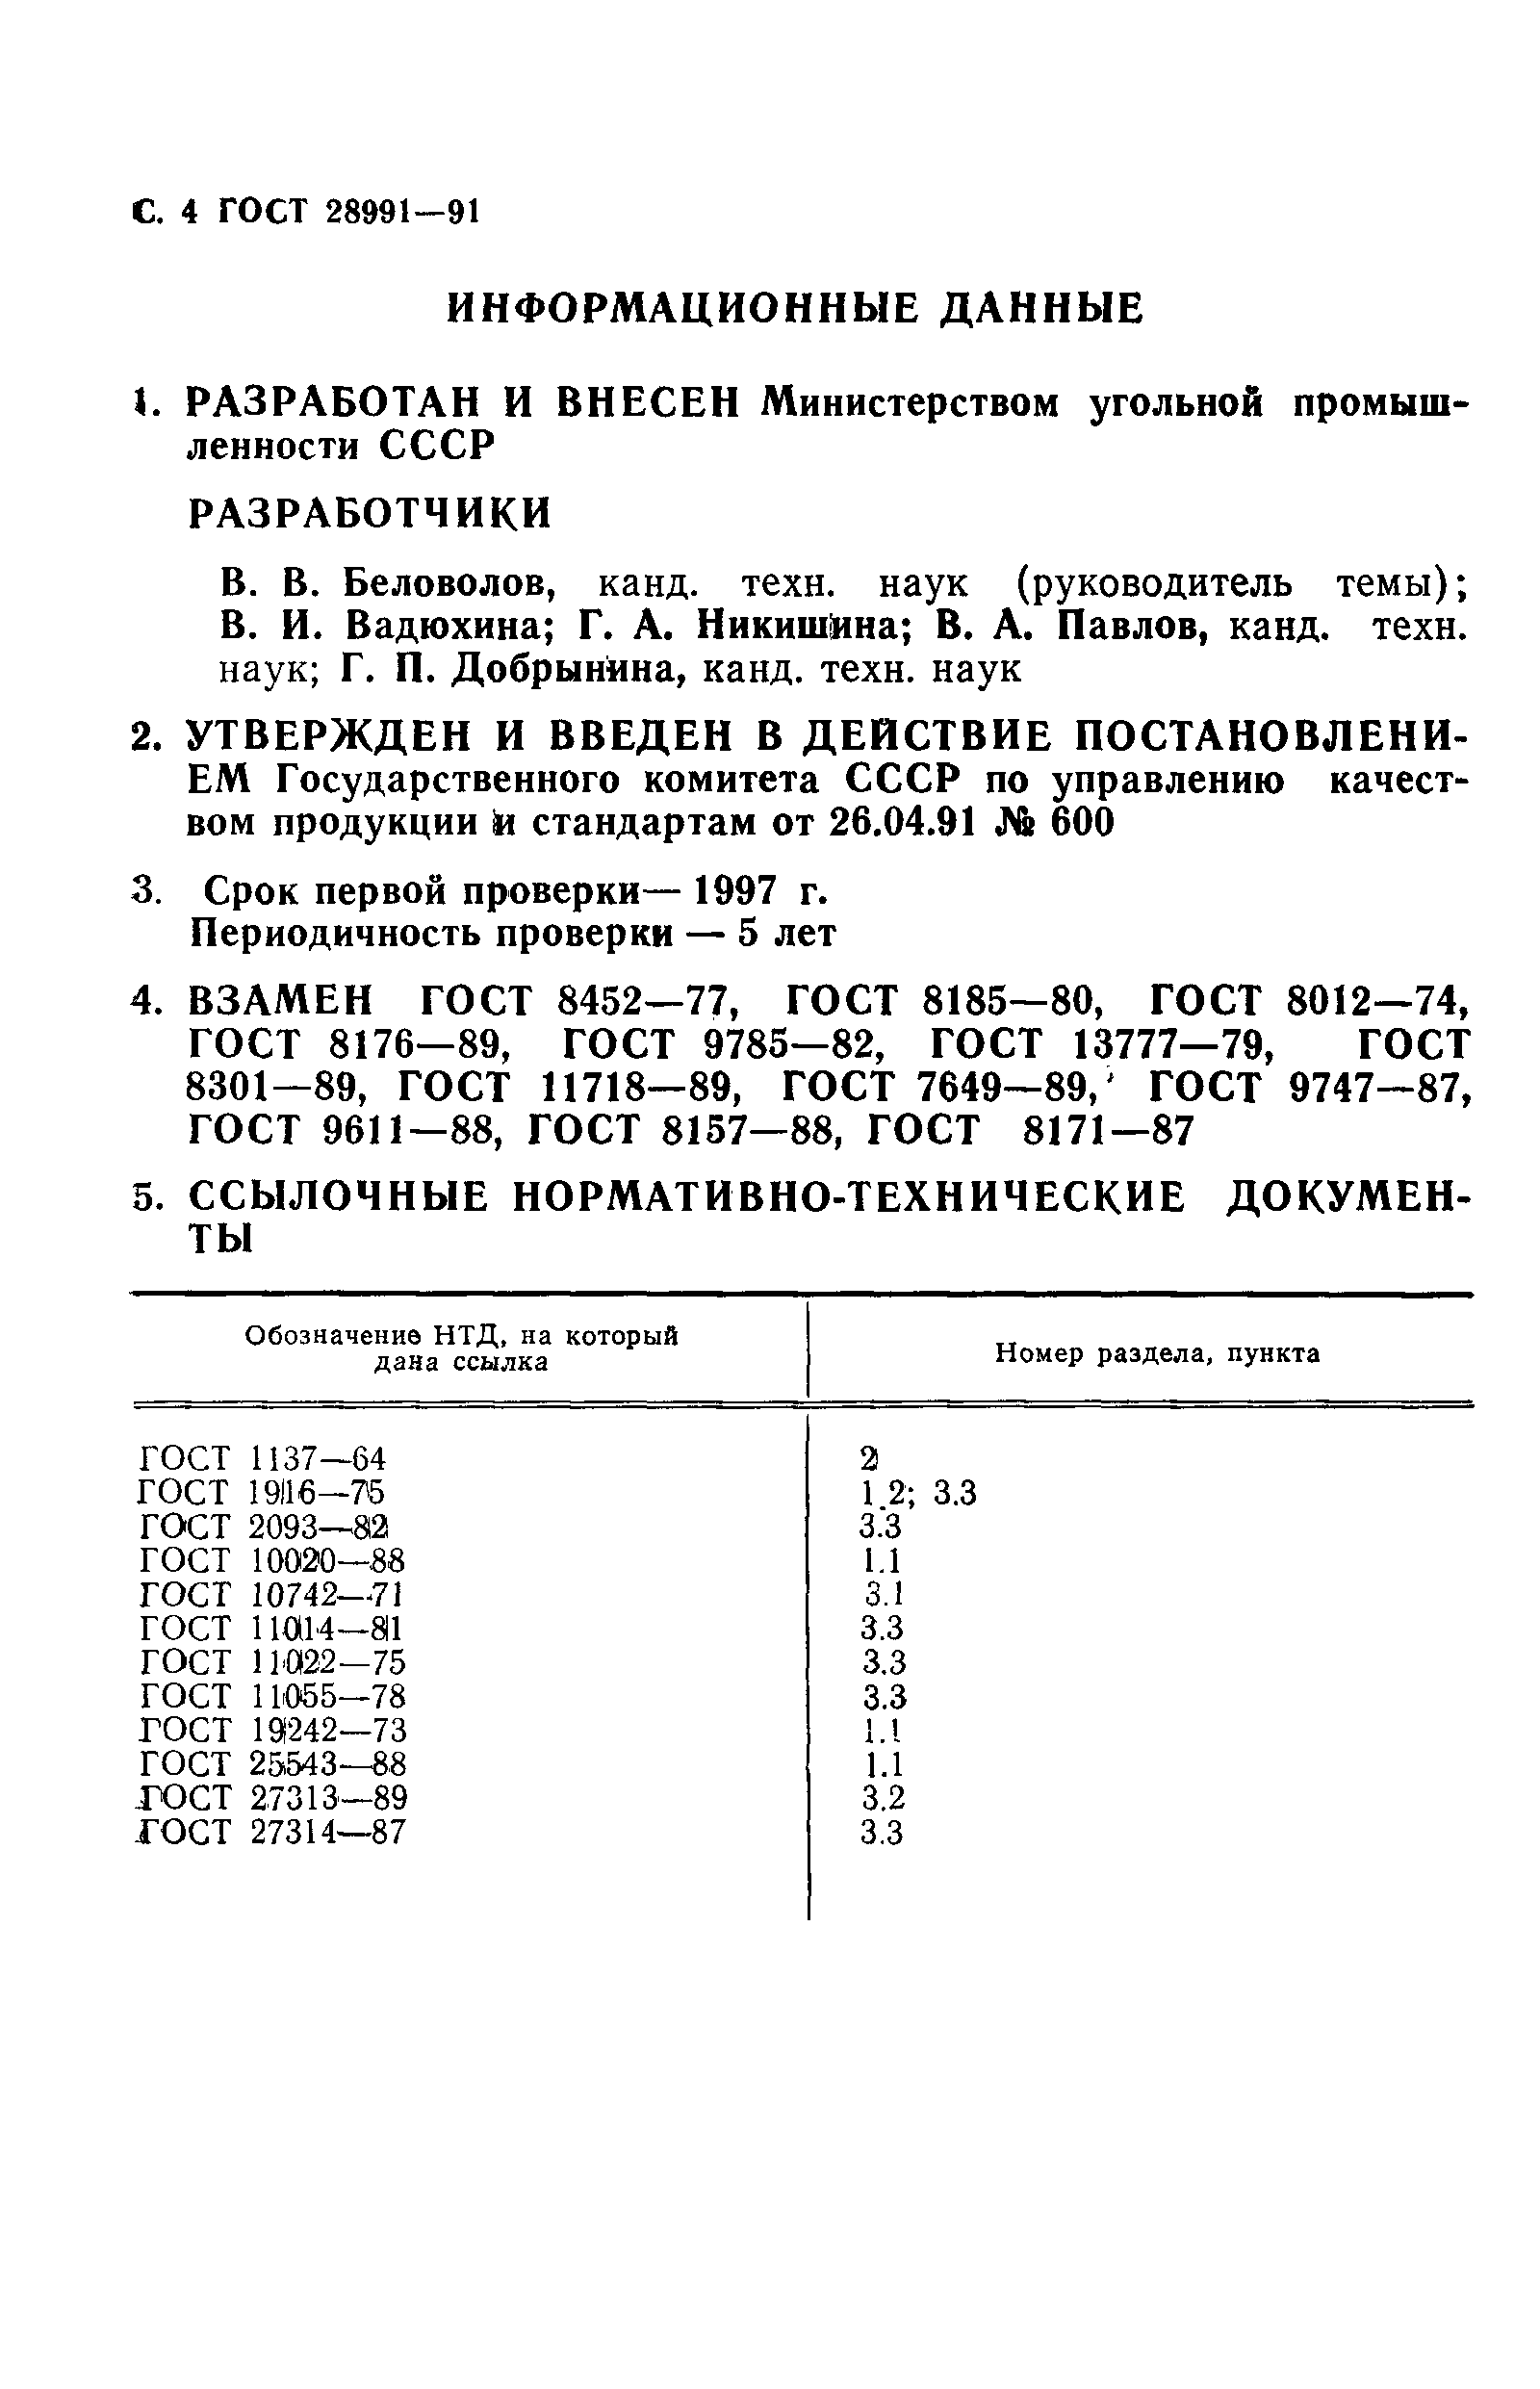 ГОСТ 28991-91